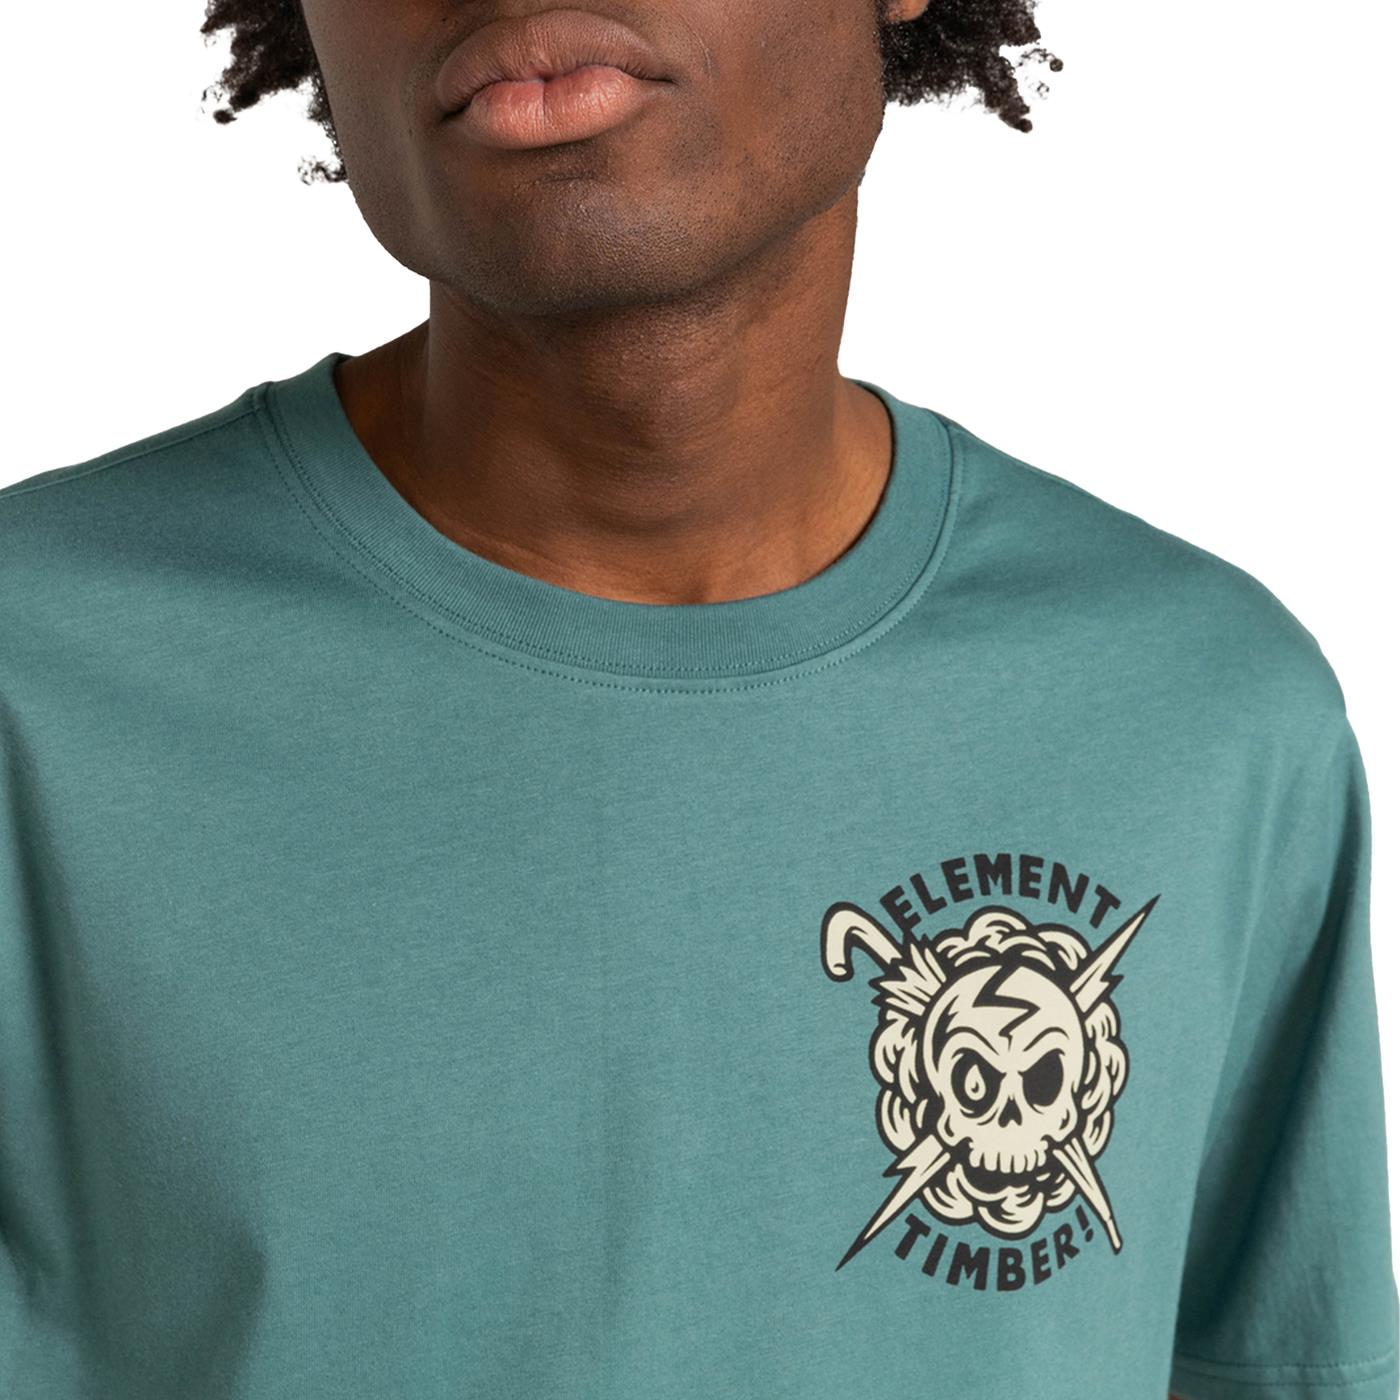 Summon T-Shirt